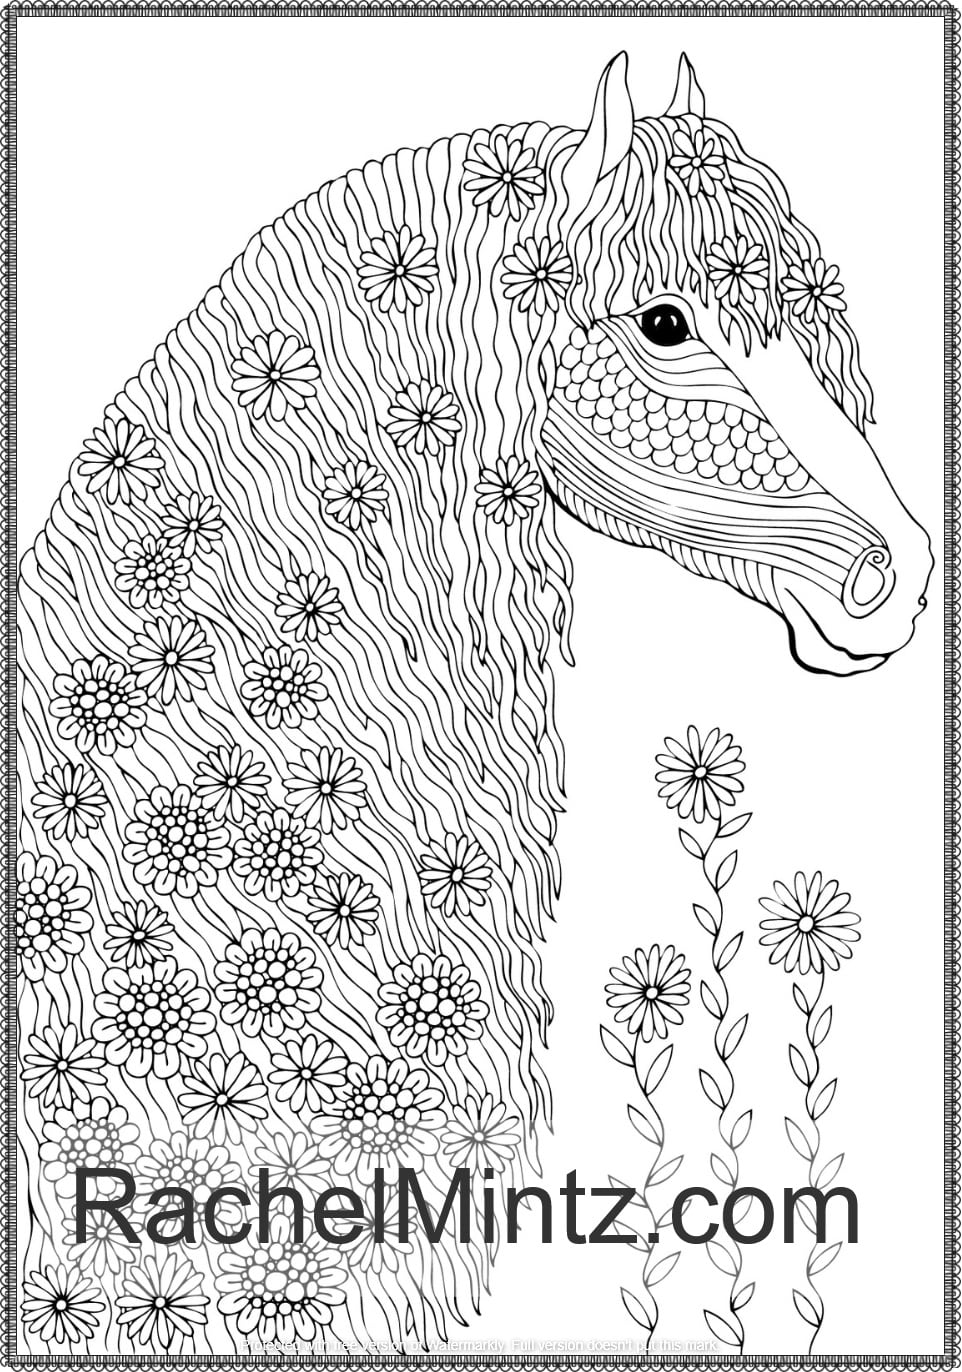 Wild Beauty -Horse Head Study - Original Acrylic Painting